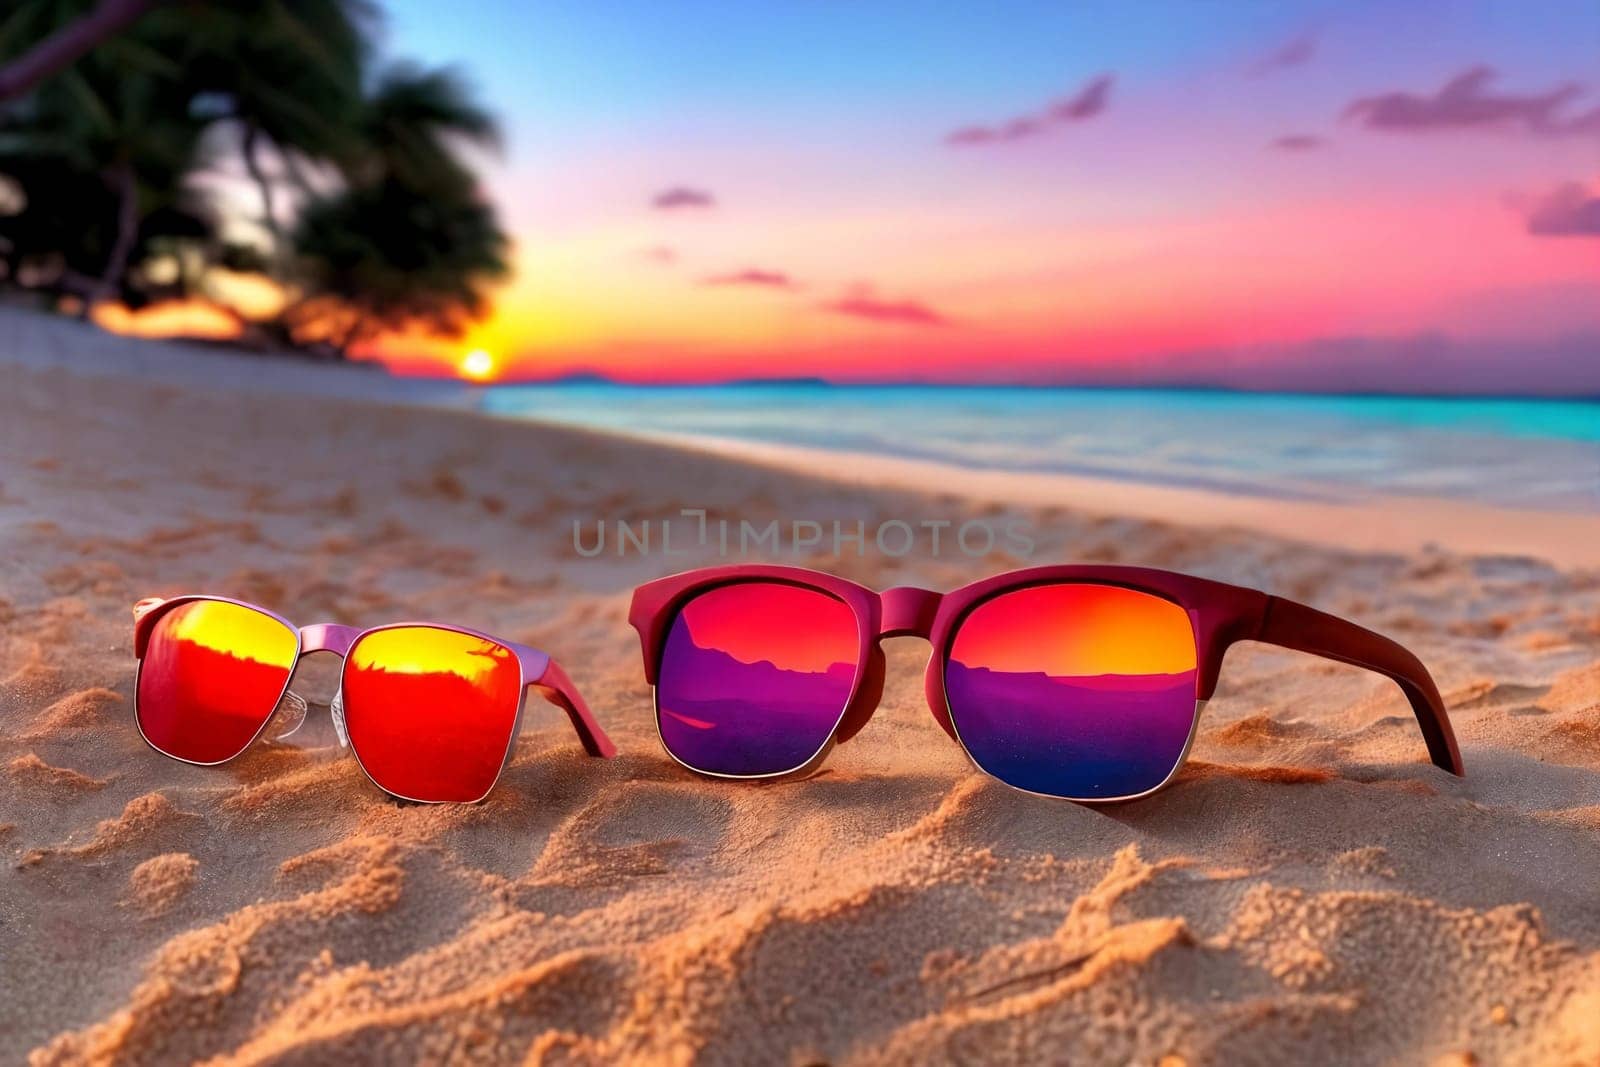 Stylish sunglasses resting on a sandy beach by GoodOlga